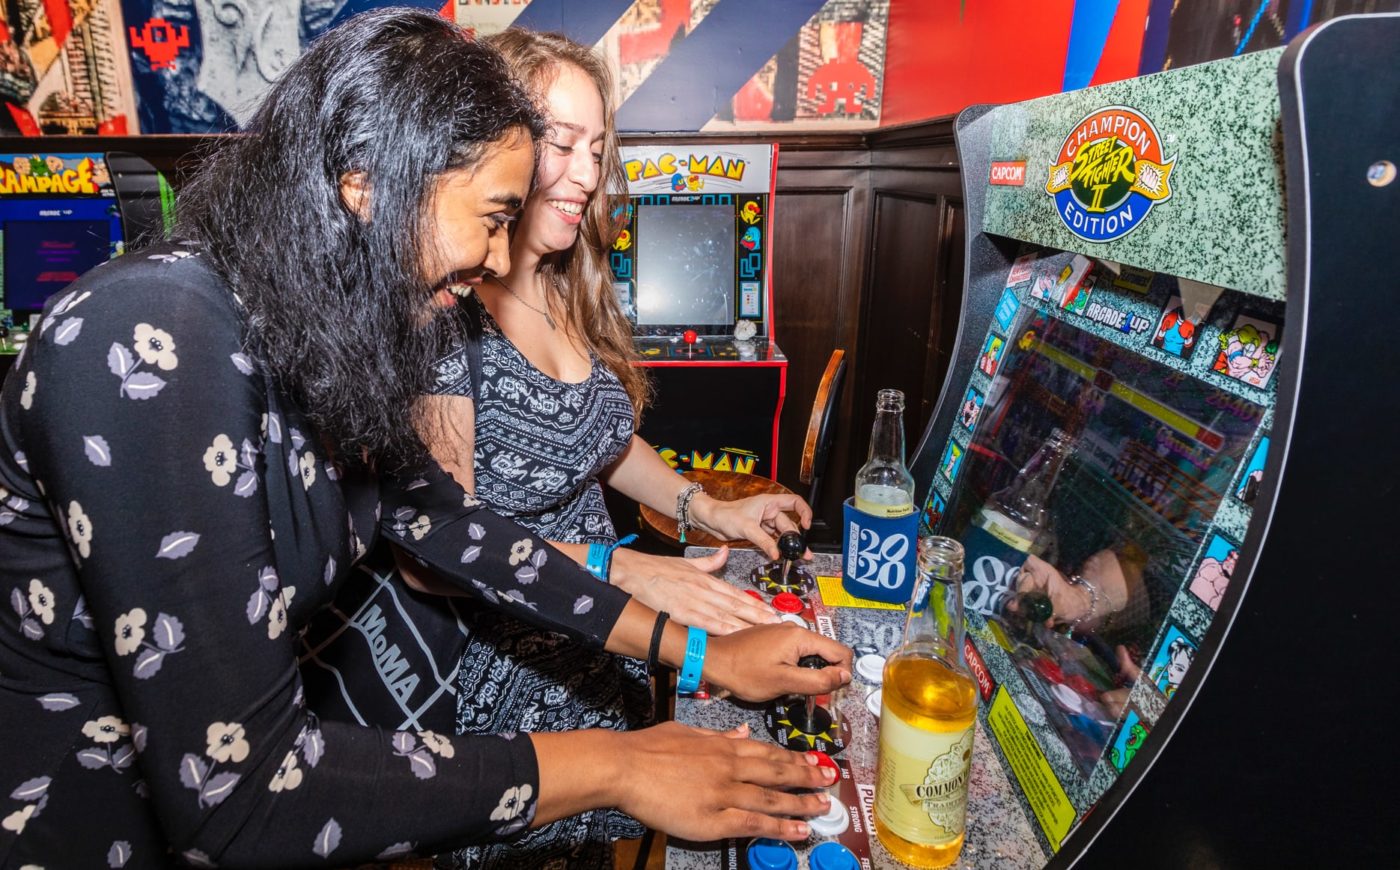 Friends playing arcade games at Penn it Forward